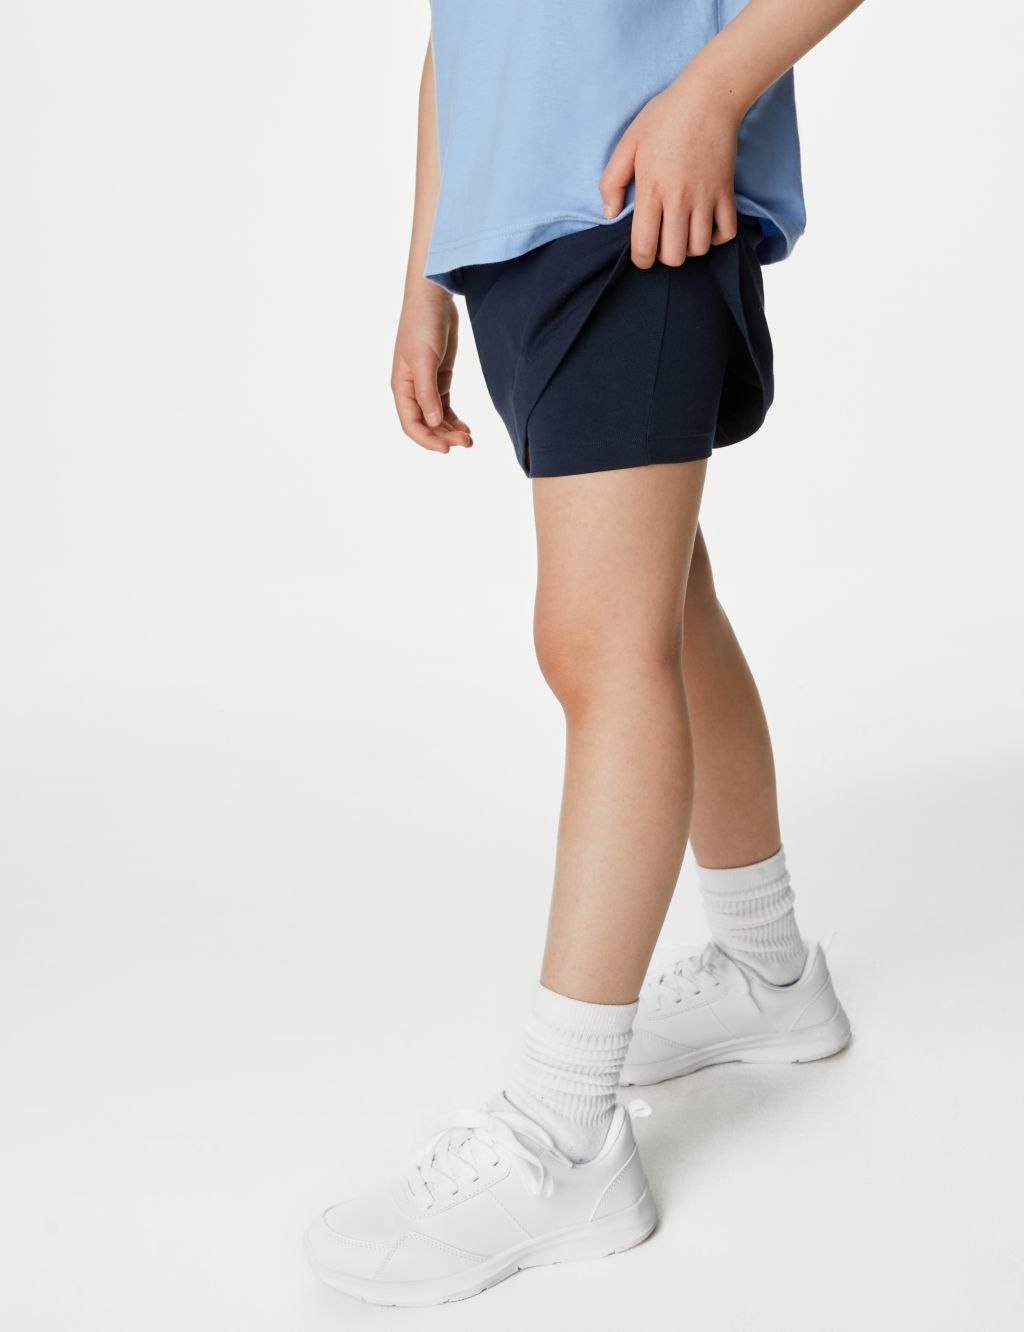 Girls' Cotton with Stretch Sports School Skorts (2-16 Yrs) image 5